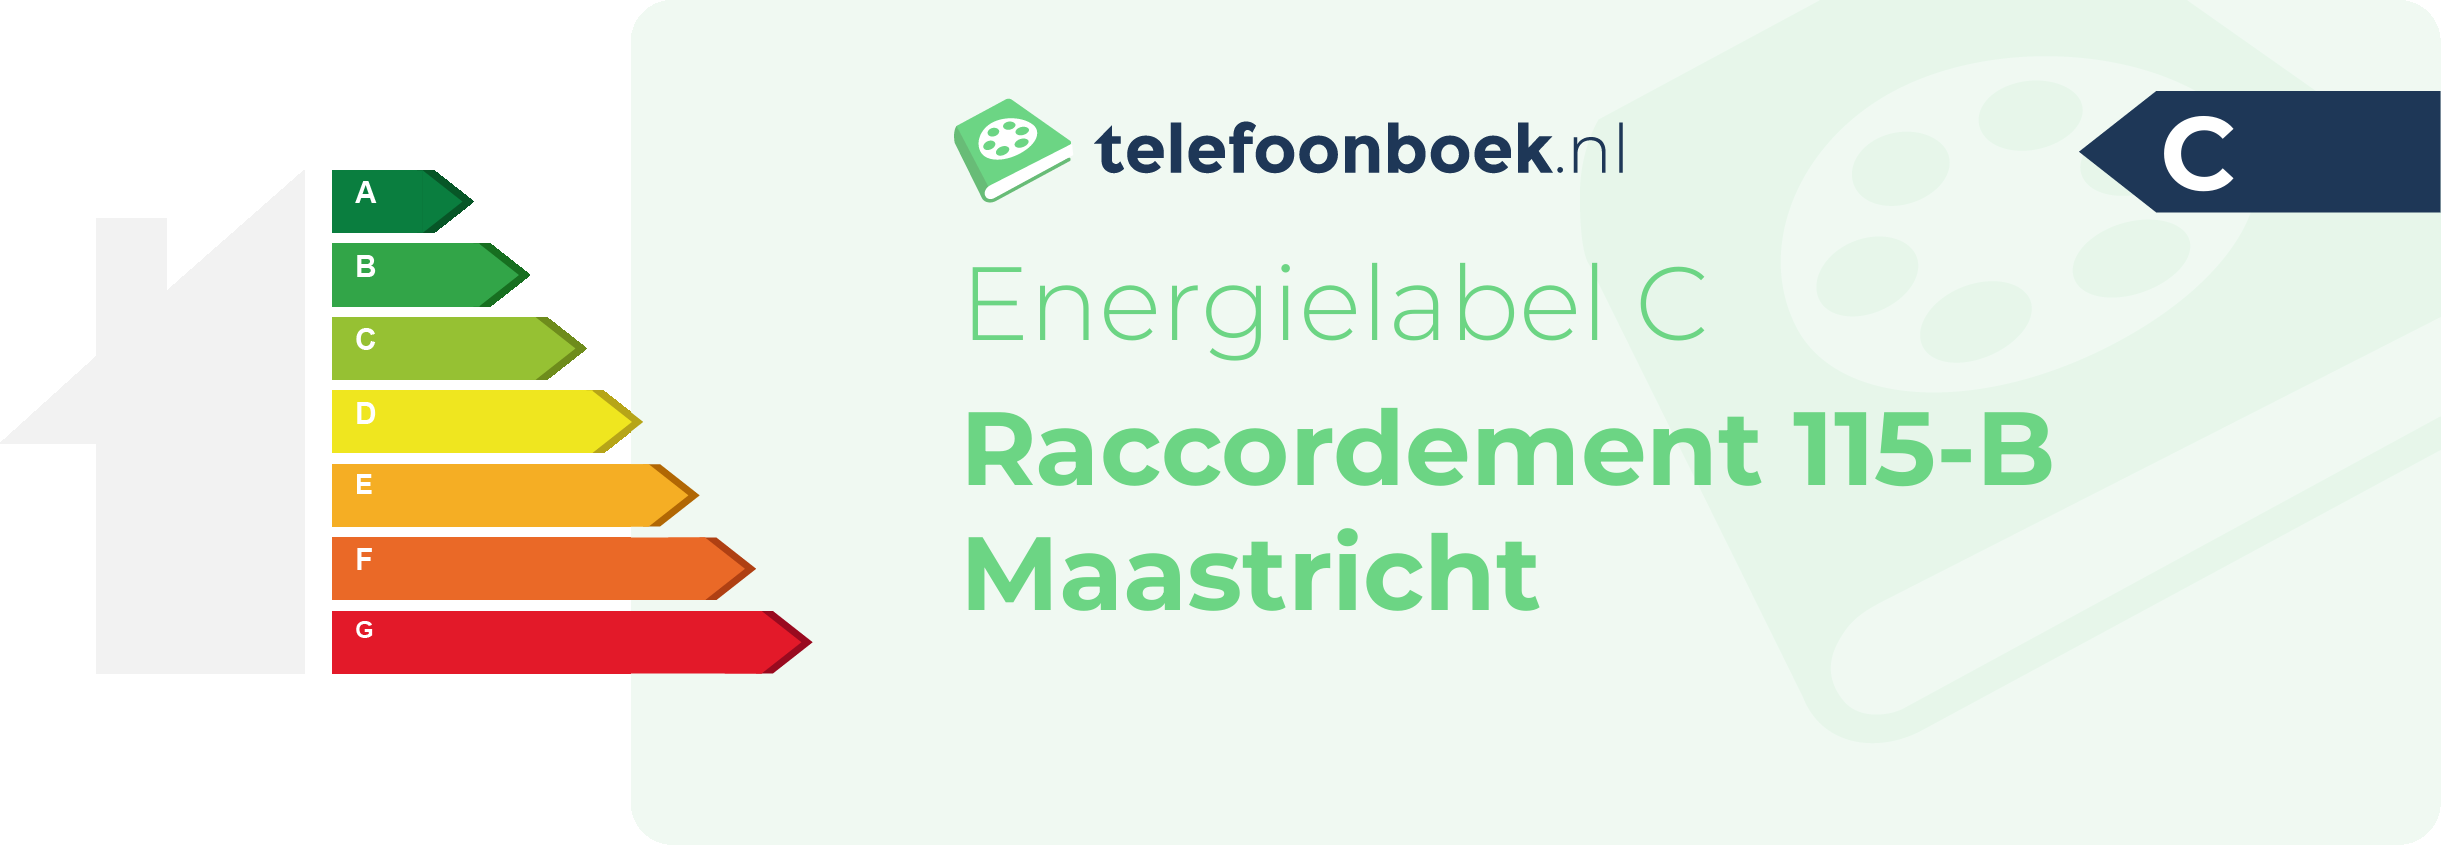 Energielabel Raccordement 115-B Maastricht